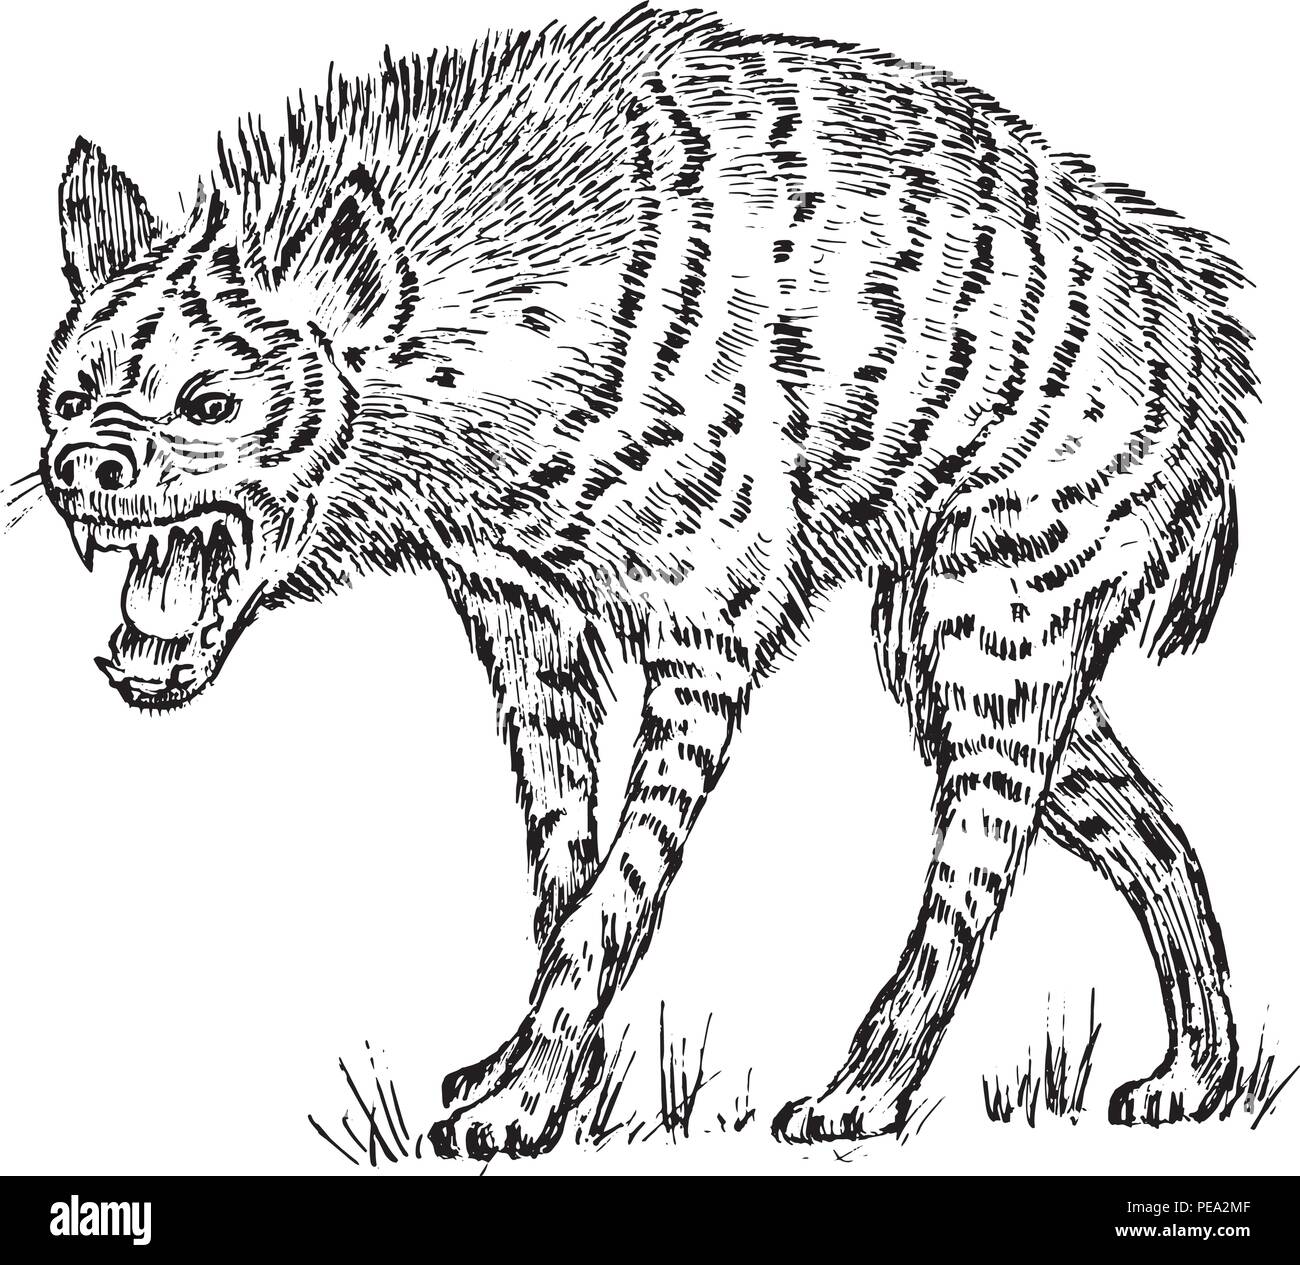 Illustration of hyena wildlife nature animal Sketch hand drawn  illustration of hyena wildlife series  CanStock